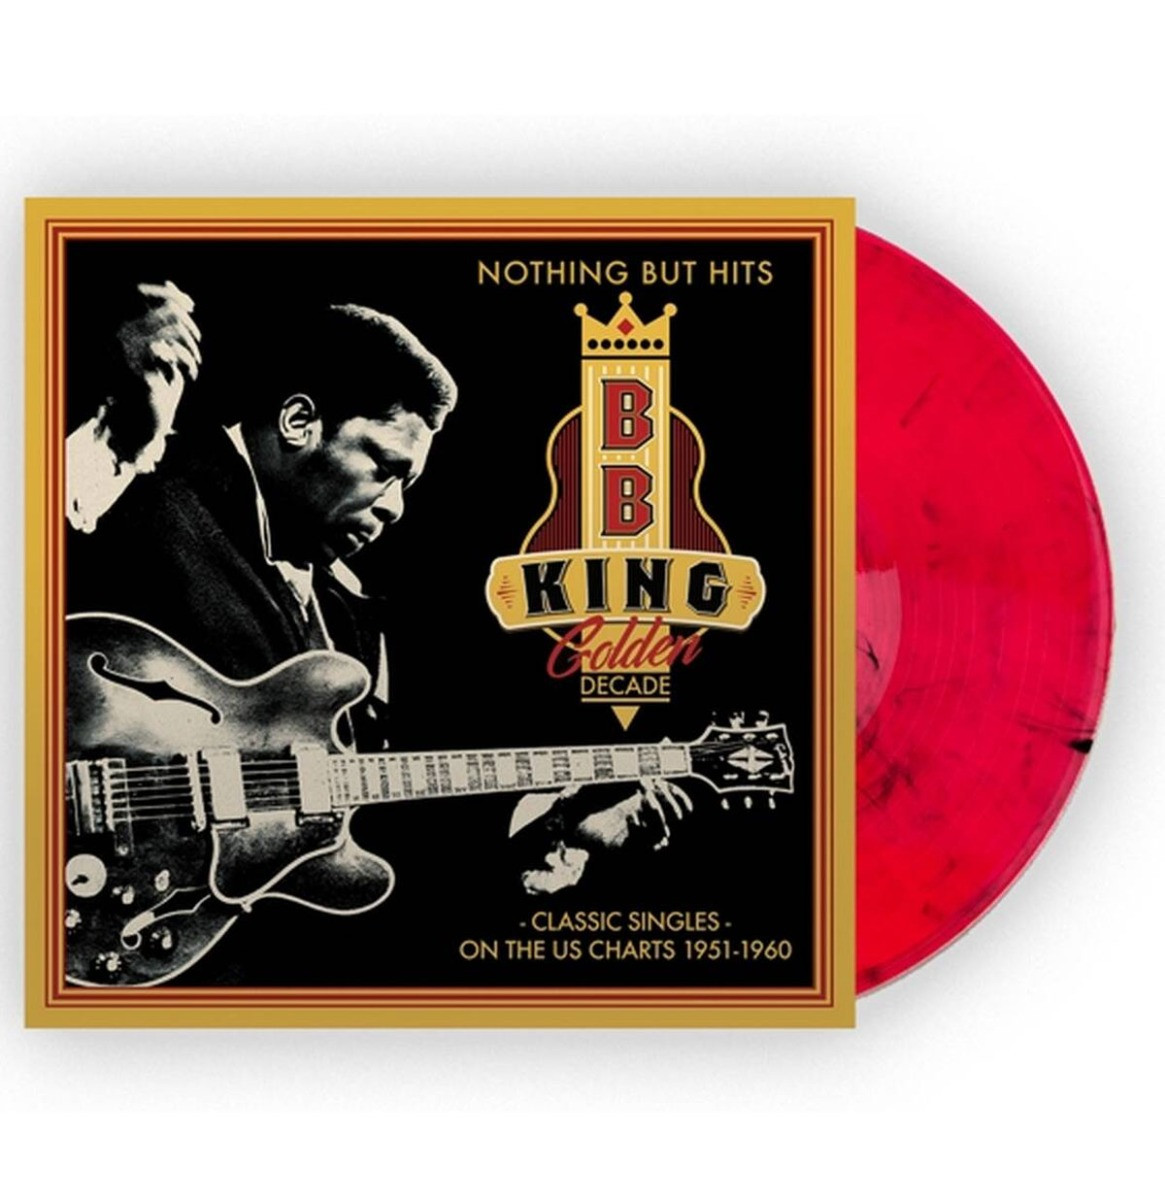 B.B. King - Golden Decade - Nothing But Hits LP